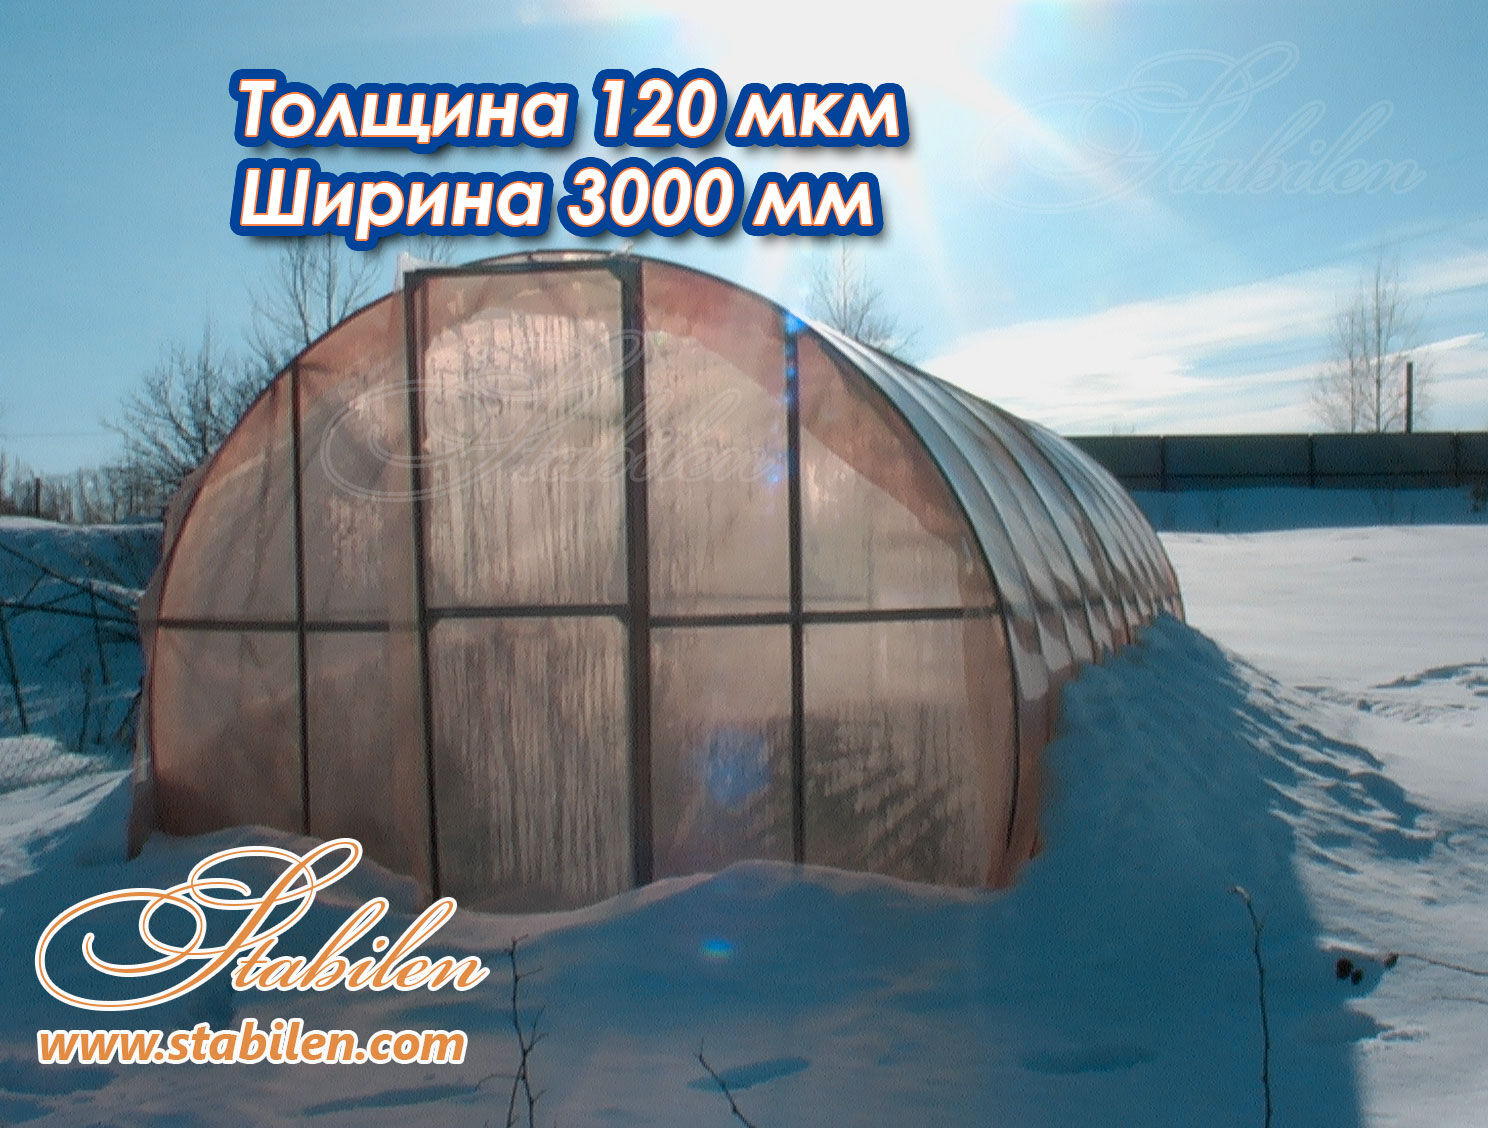 Пленка для парников Стабилен 120 мкм (3000мм), цена в Санкт-Петербурге от компании Склад-Сервис